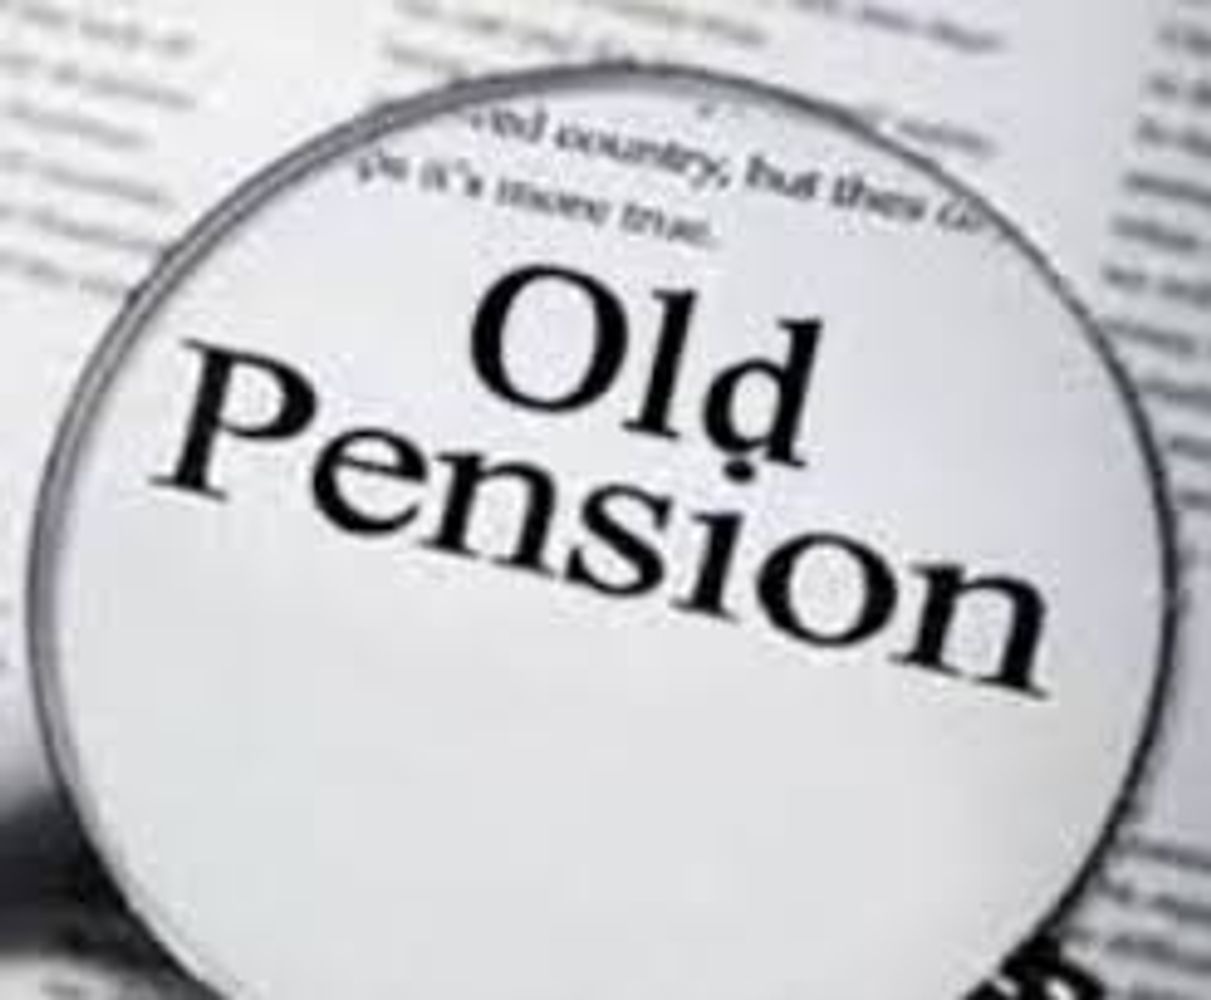 Restoration of Old Pension Scheme - Lok Sabha QA